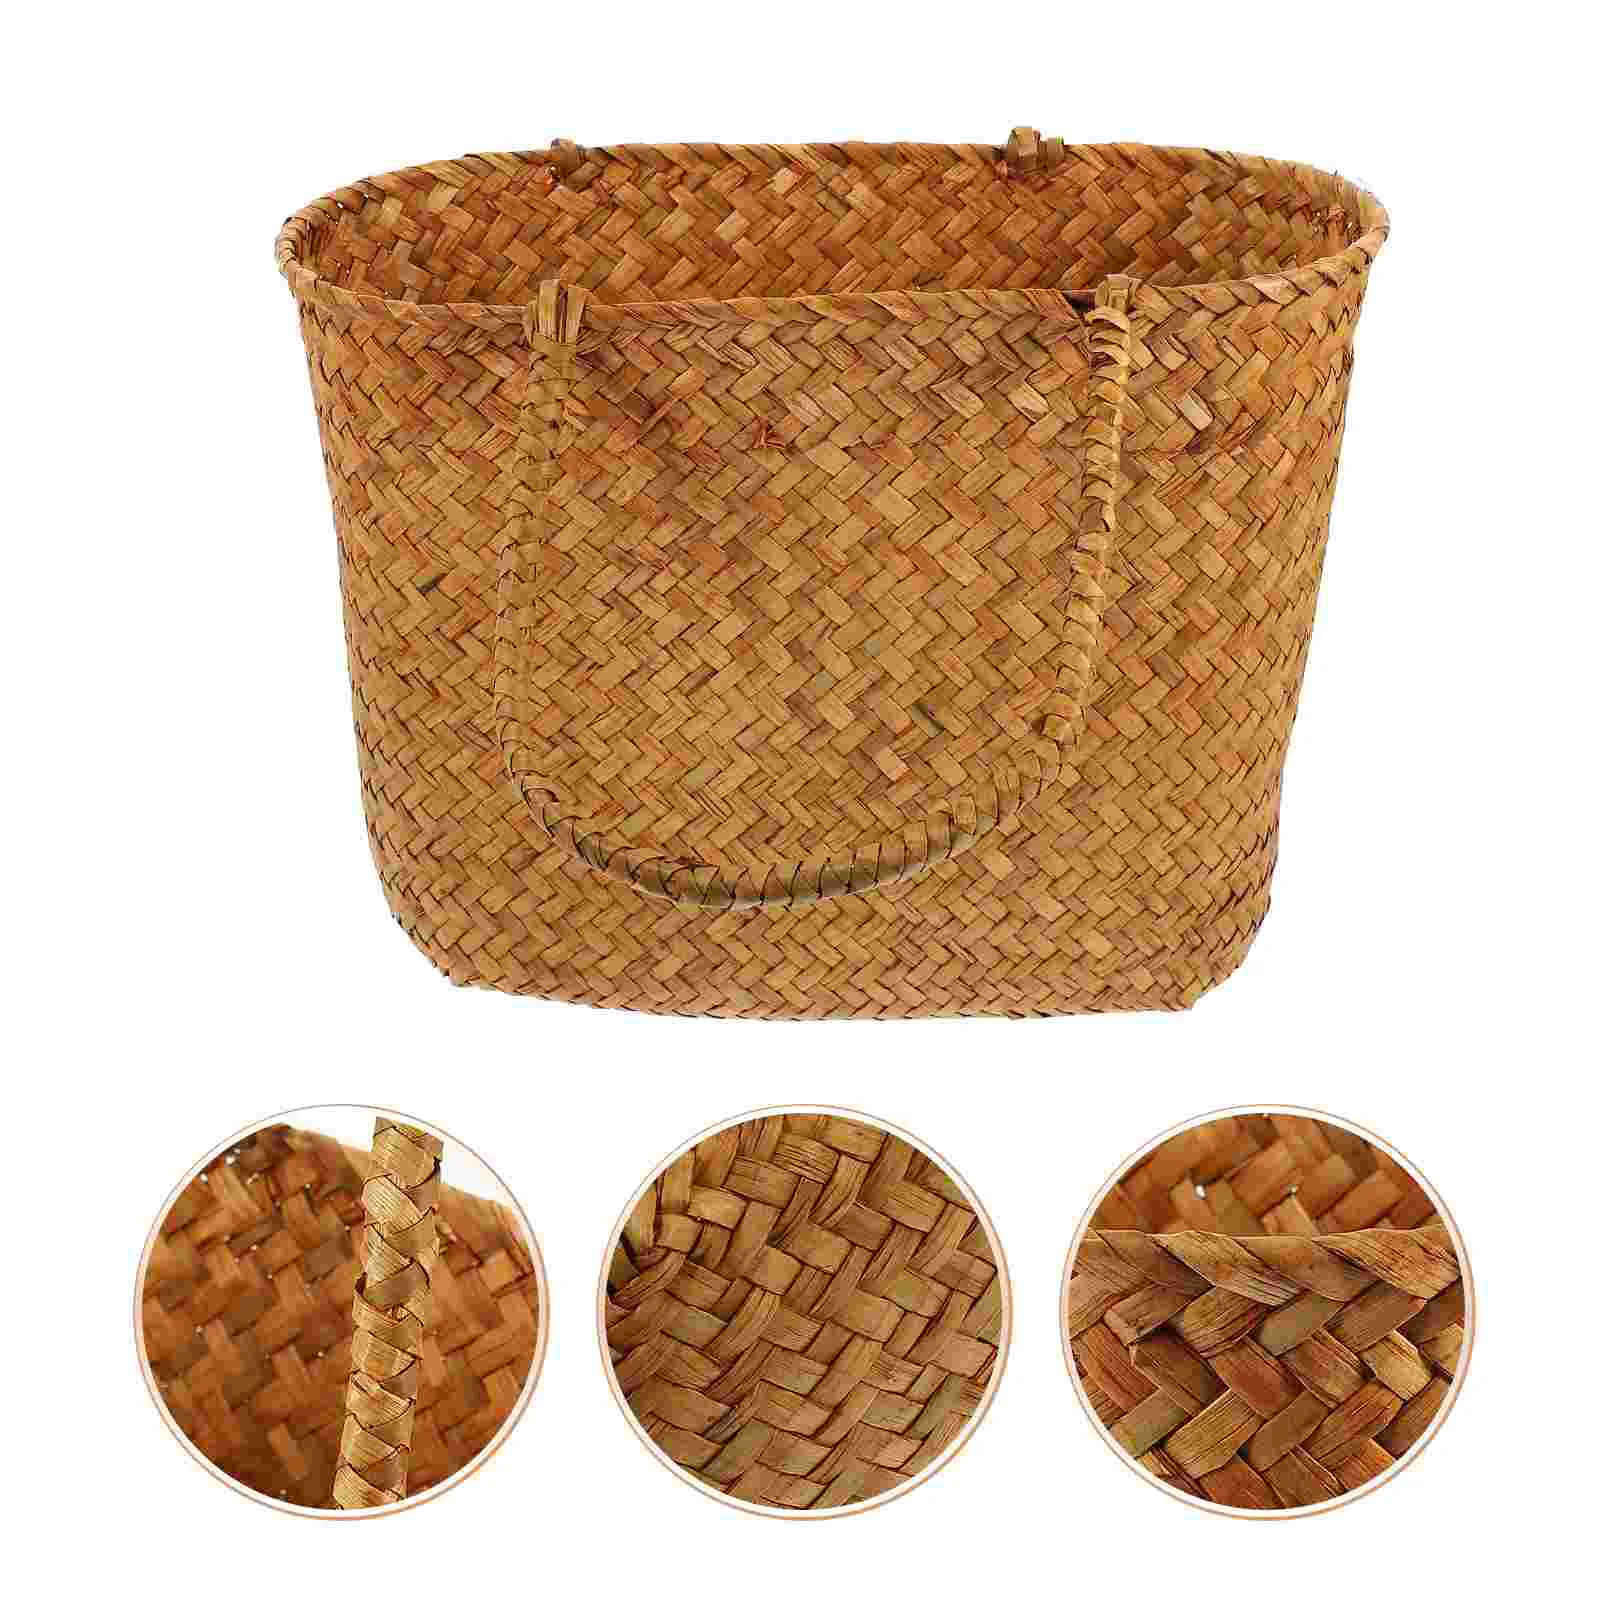 

Alipis African Market Basket Woven Straw Basket Grocery Basket Beach Shopping Bag Wicker Storage Baskets Tote Willow